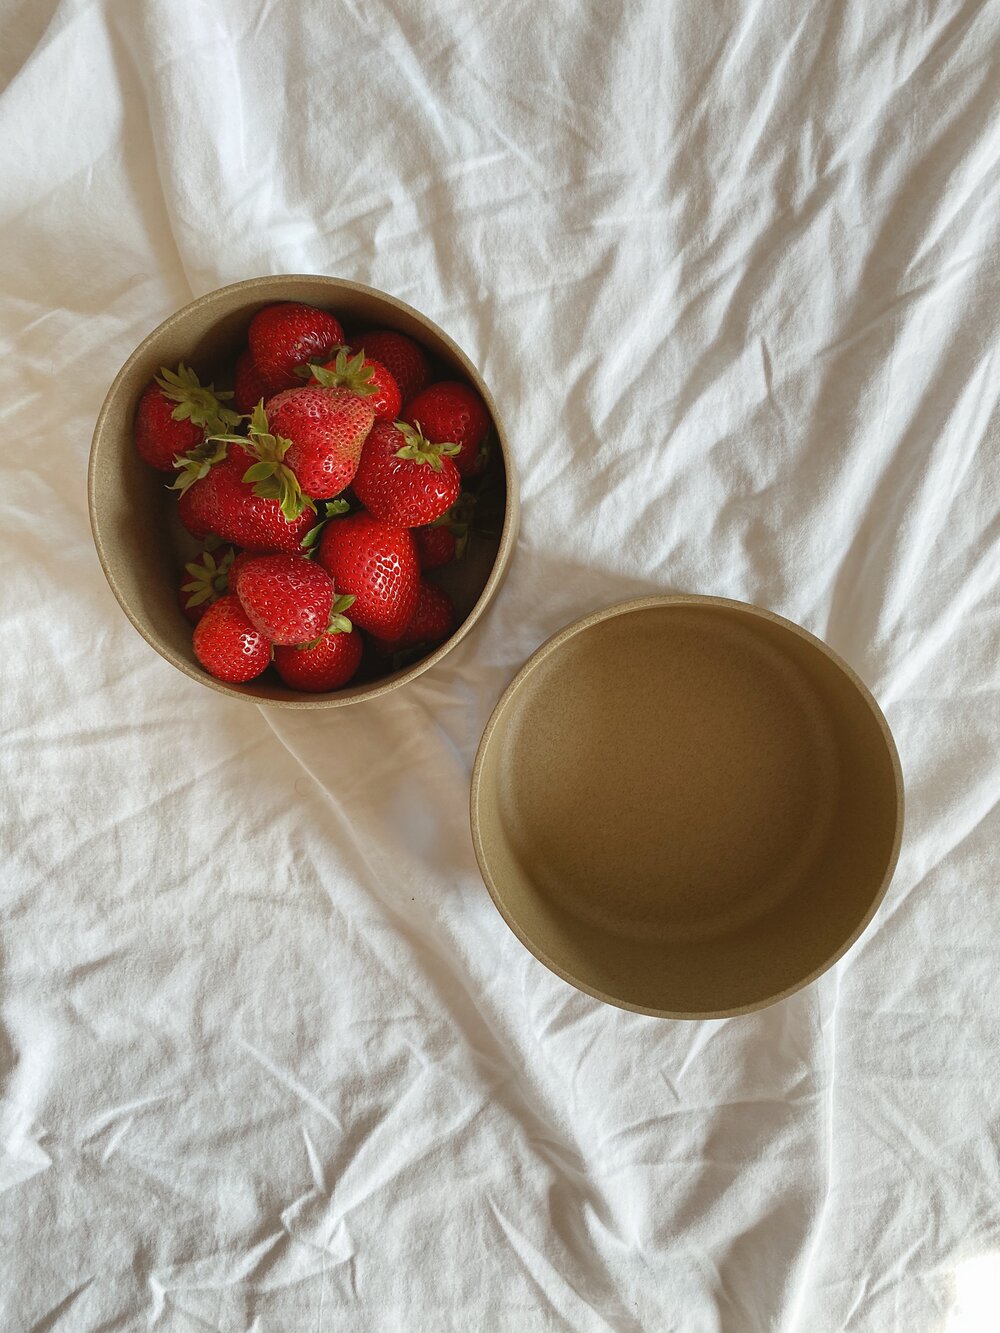 Hasami Porcelain Stackable Bowl in Natural